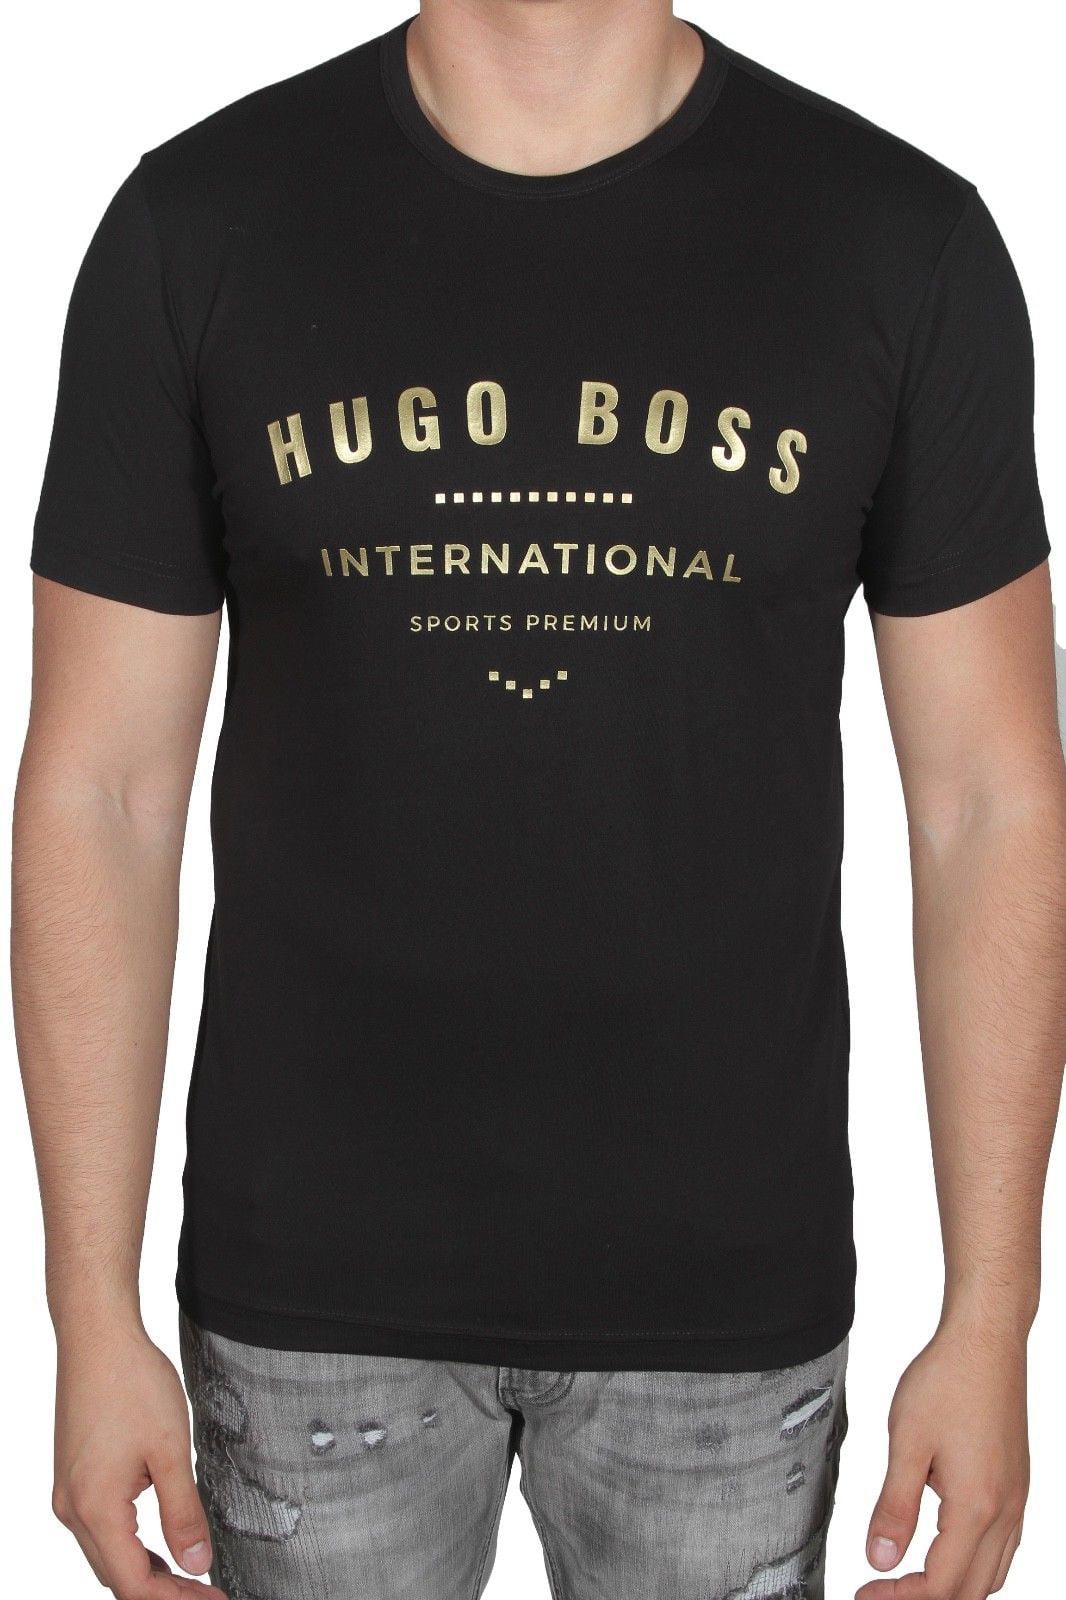 hugo boss international t shirt Cheaper 